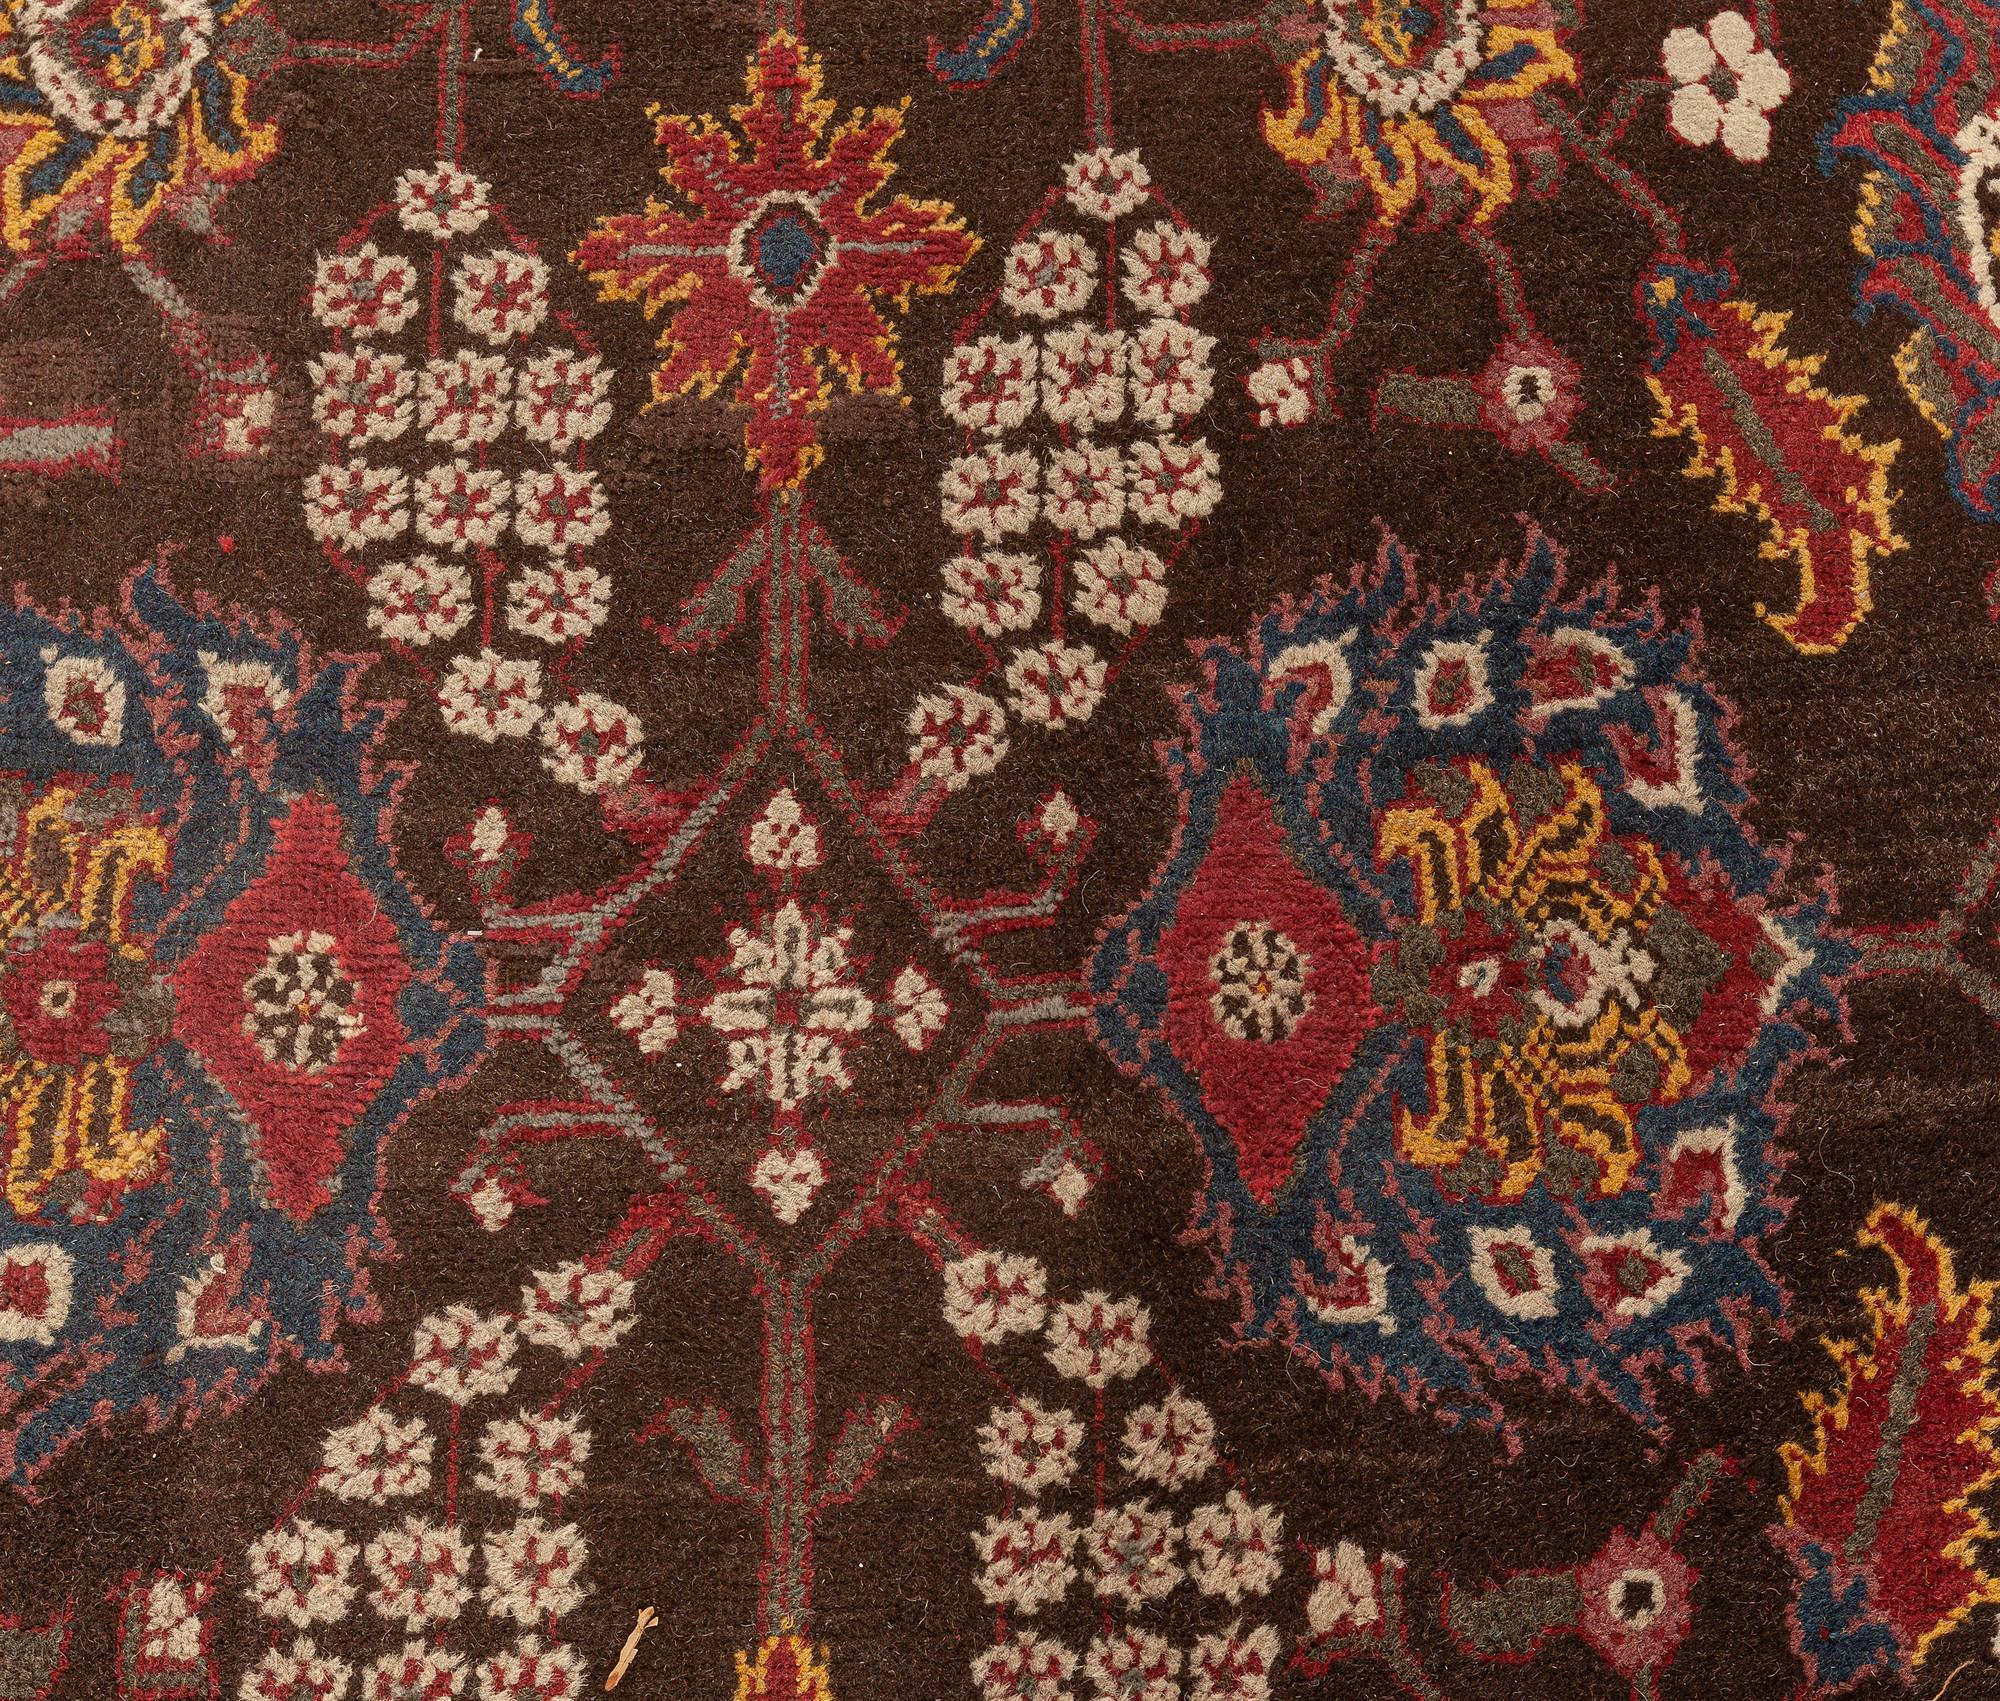 Vintage Indian Agra brown, red, blue, ivory handmade wool carpet
Size: 11'10